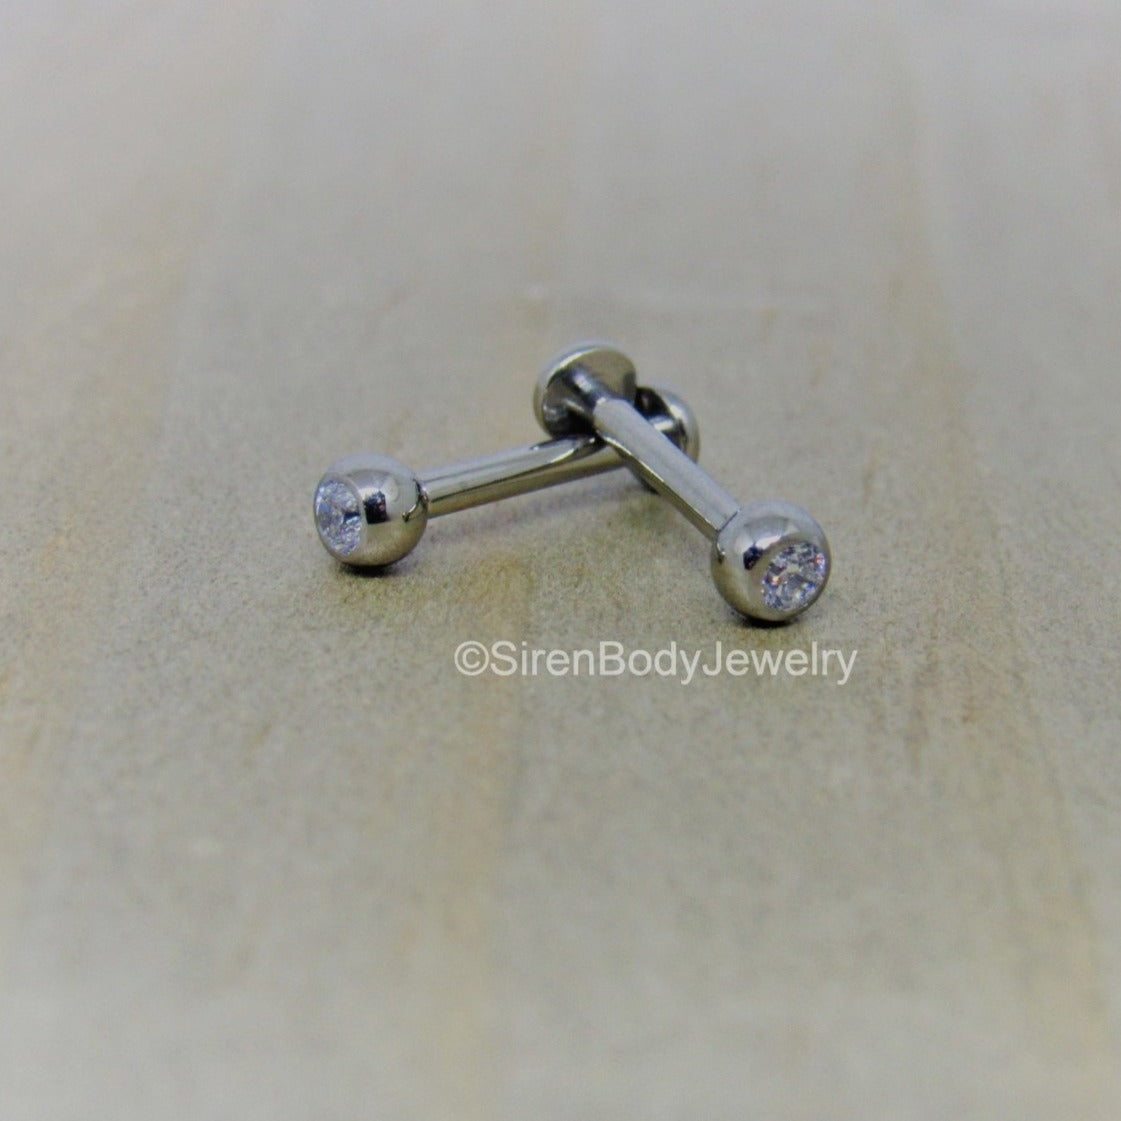 16g titanium flat back earring stud set 3mm gemstone ball ends